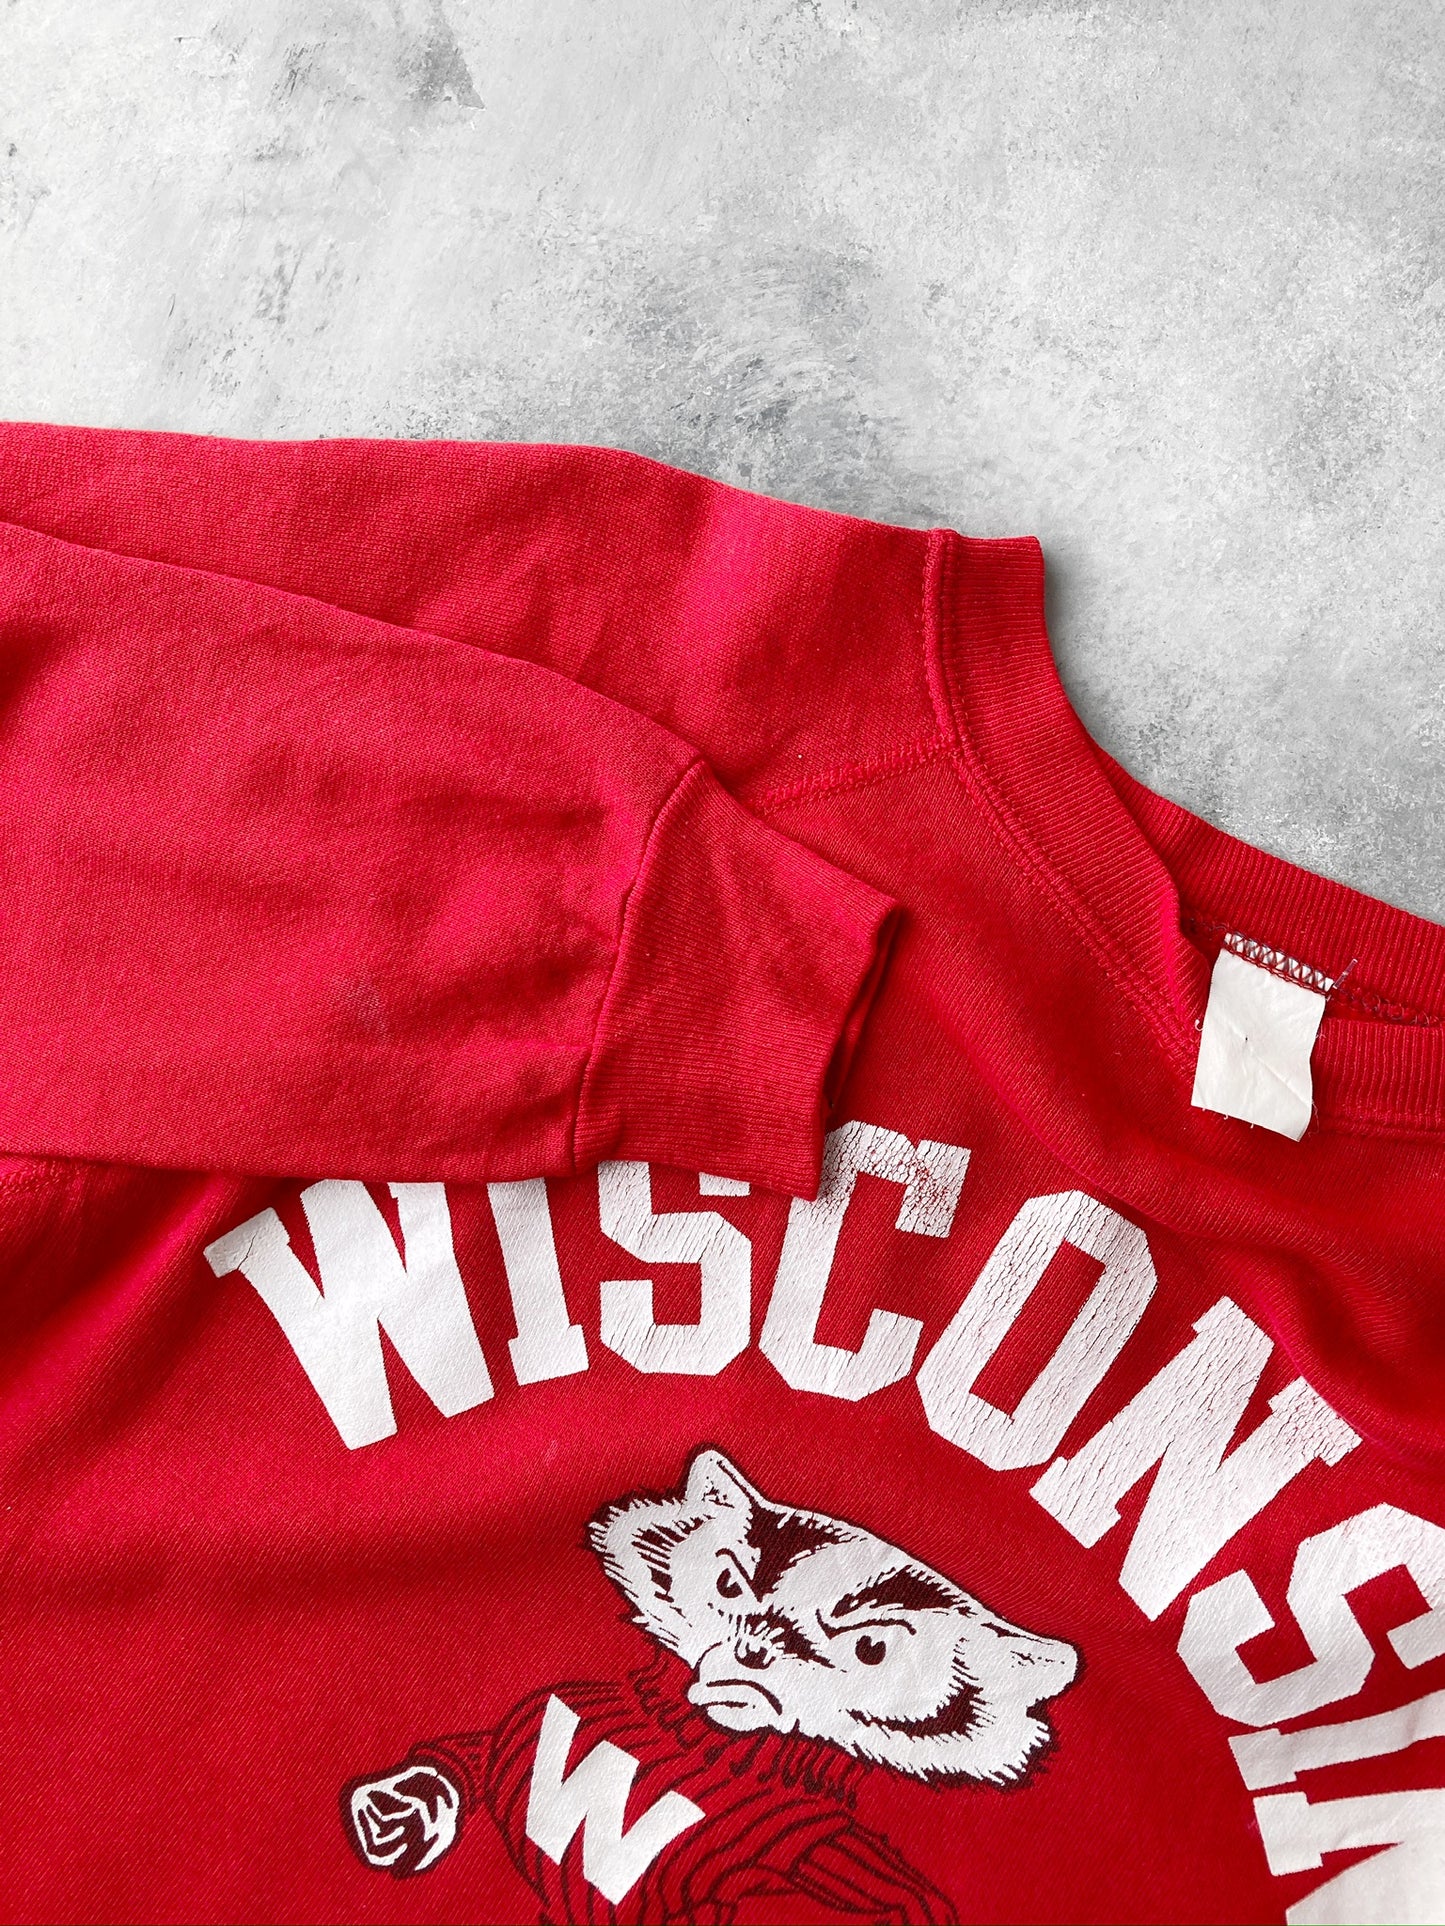 University of Wisconsin Sweatshirt 80's - Large / XL